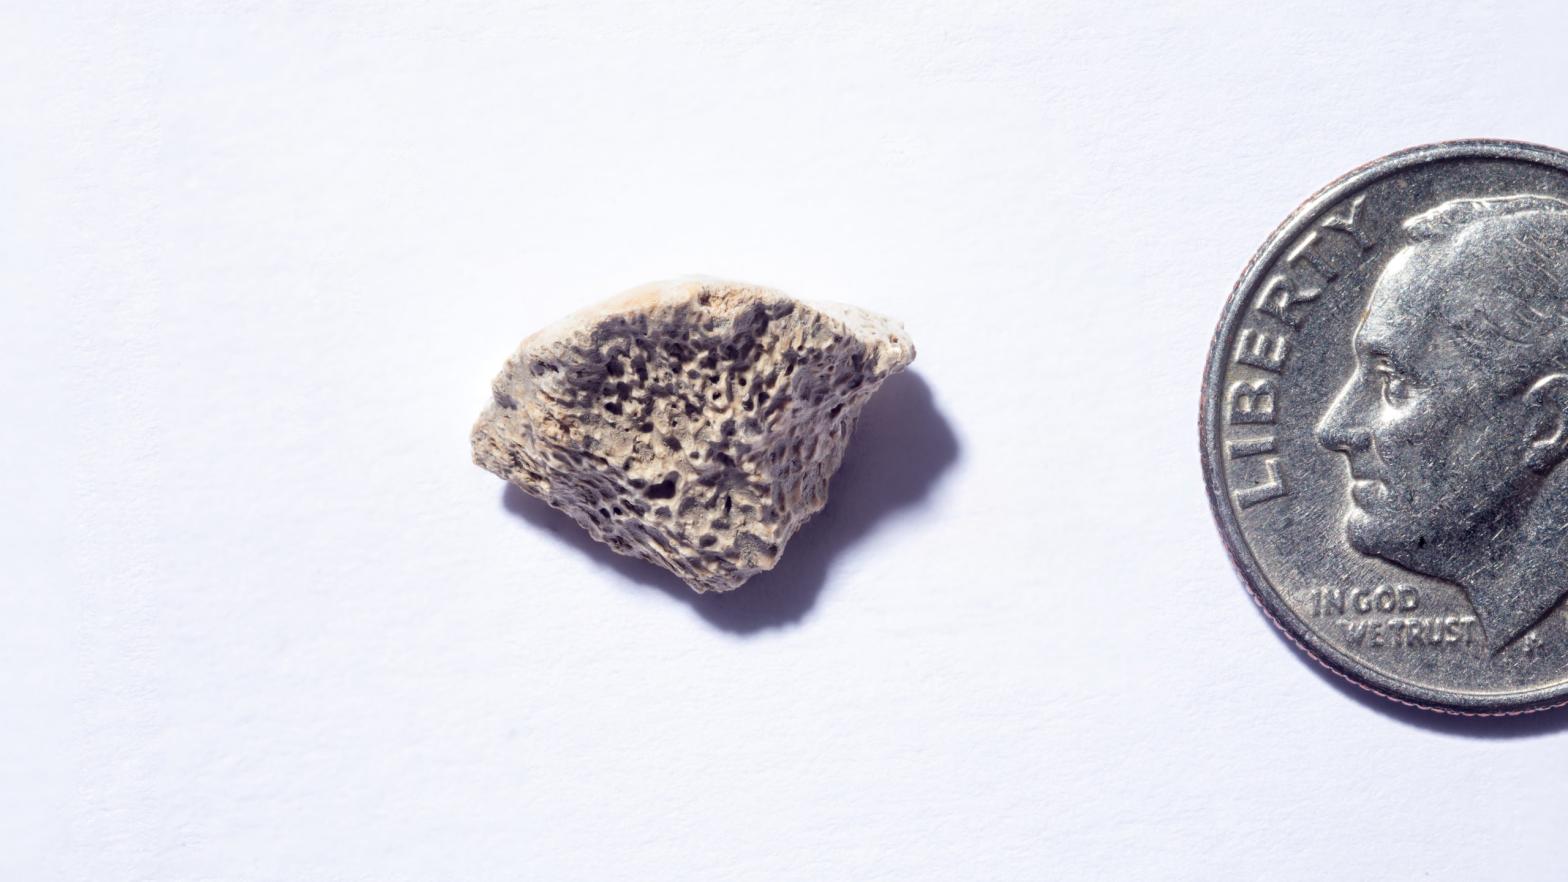 The canine bone fragment, found in Southeast Alaska. (Image: Douglas Levere/University at Buffalo)